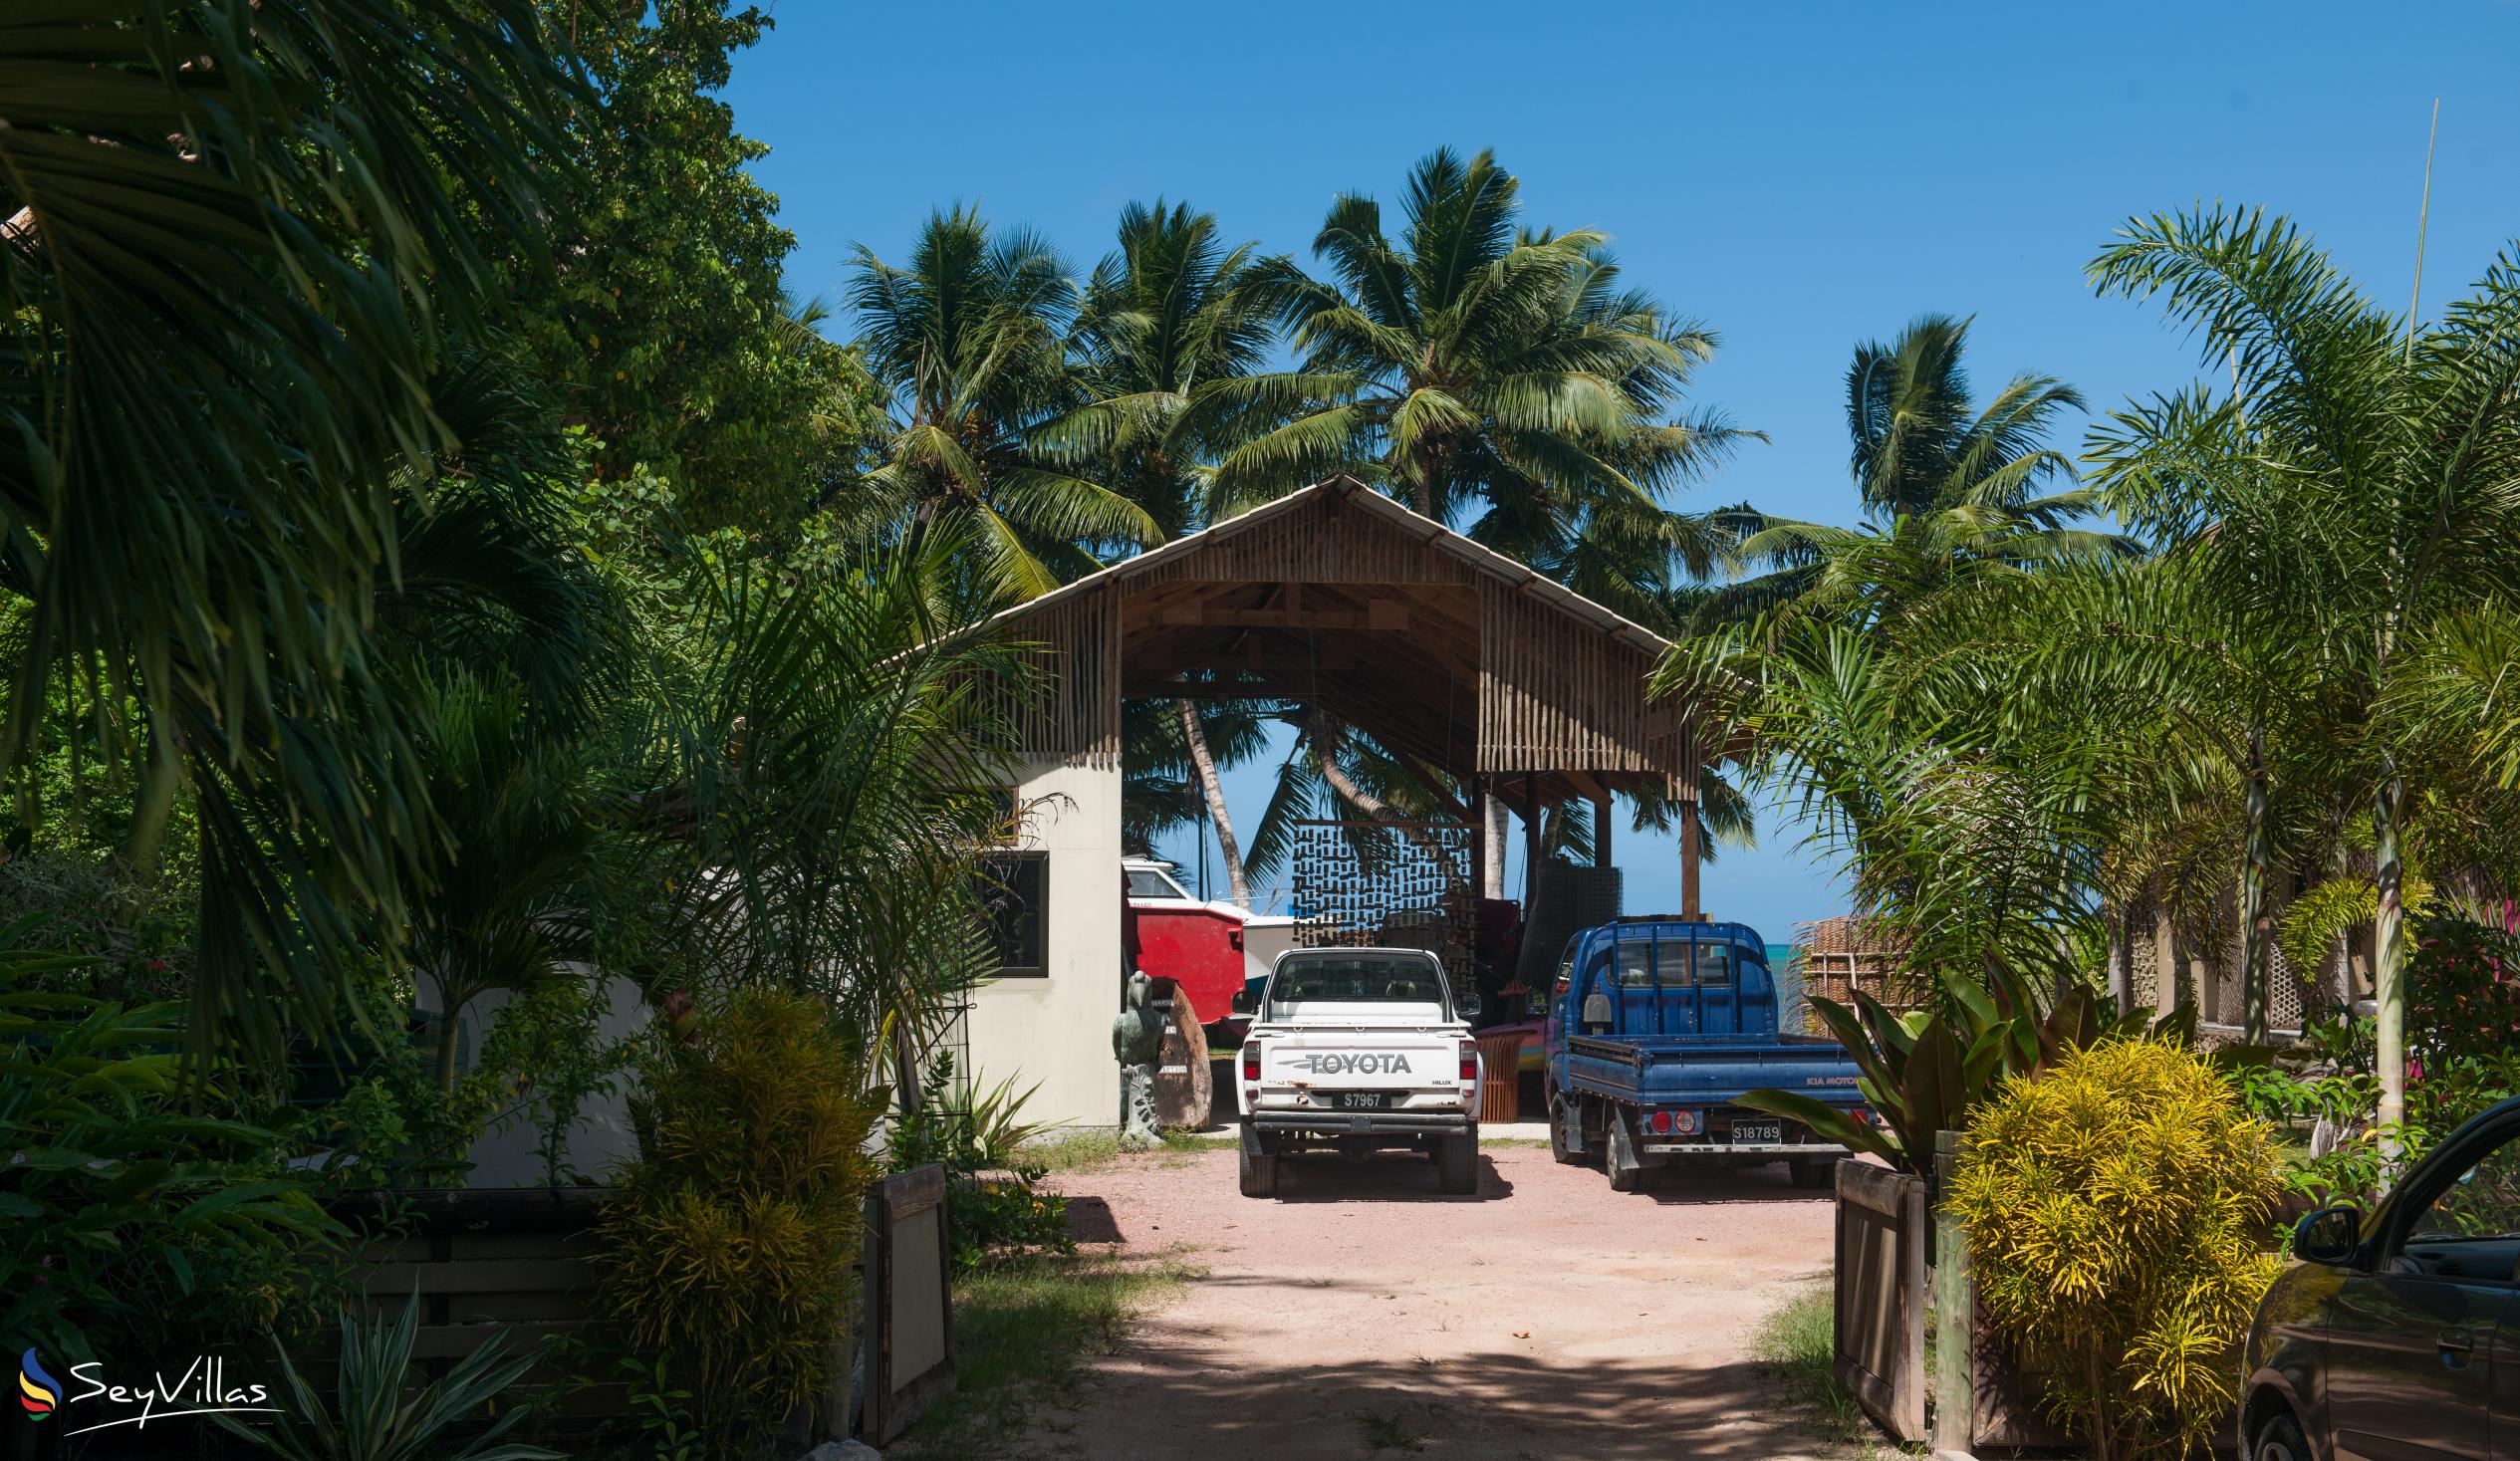 Foto 41: Villas des Alizes - Posizione - Praslin (Seychelles)